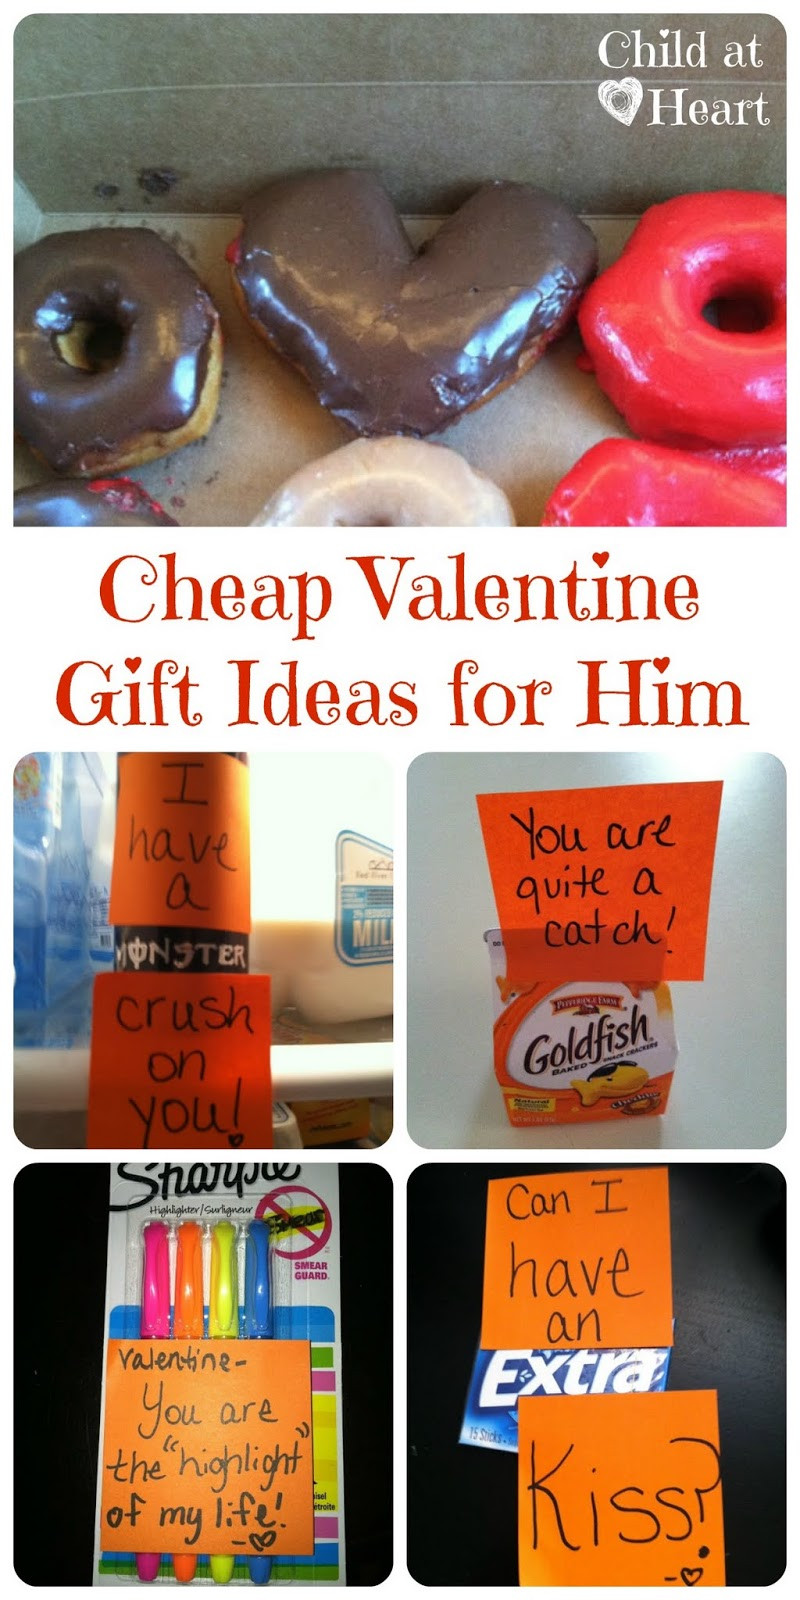 Valentines Day Gift Ideas For Boyfriends
 Cheap Valentine Gift Ideas for Him Child at Heart Blog